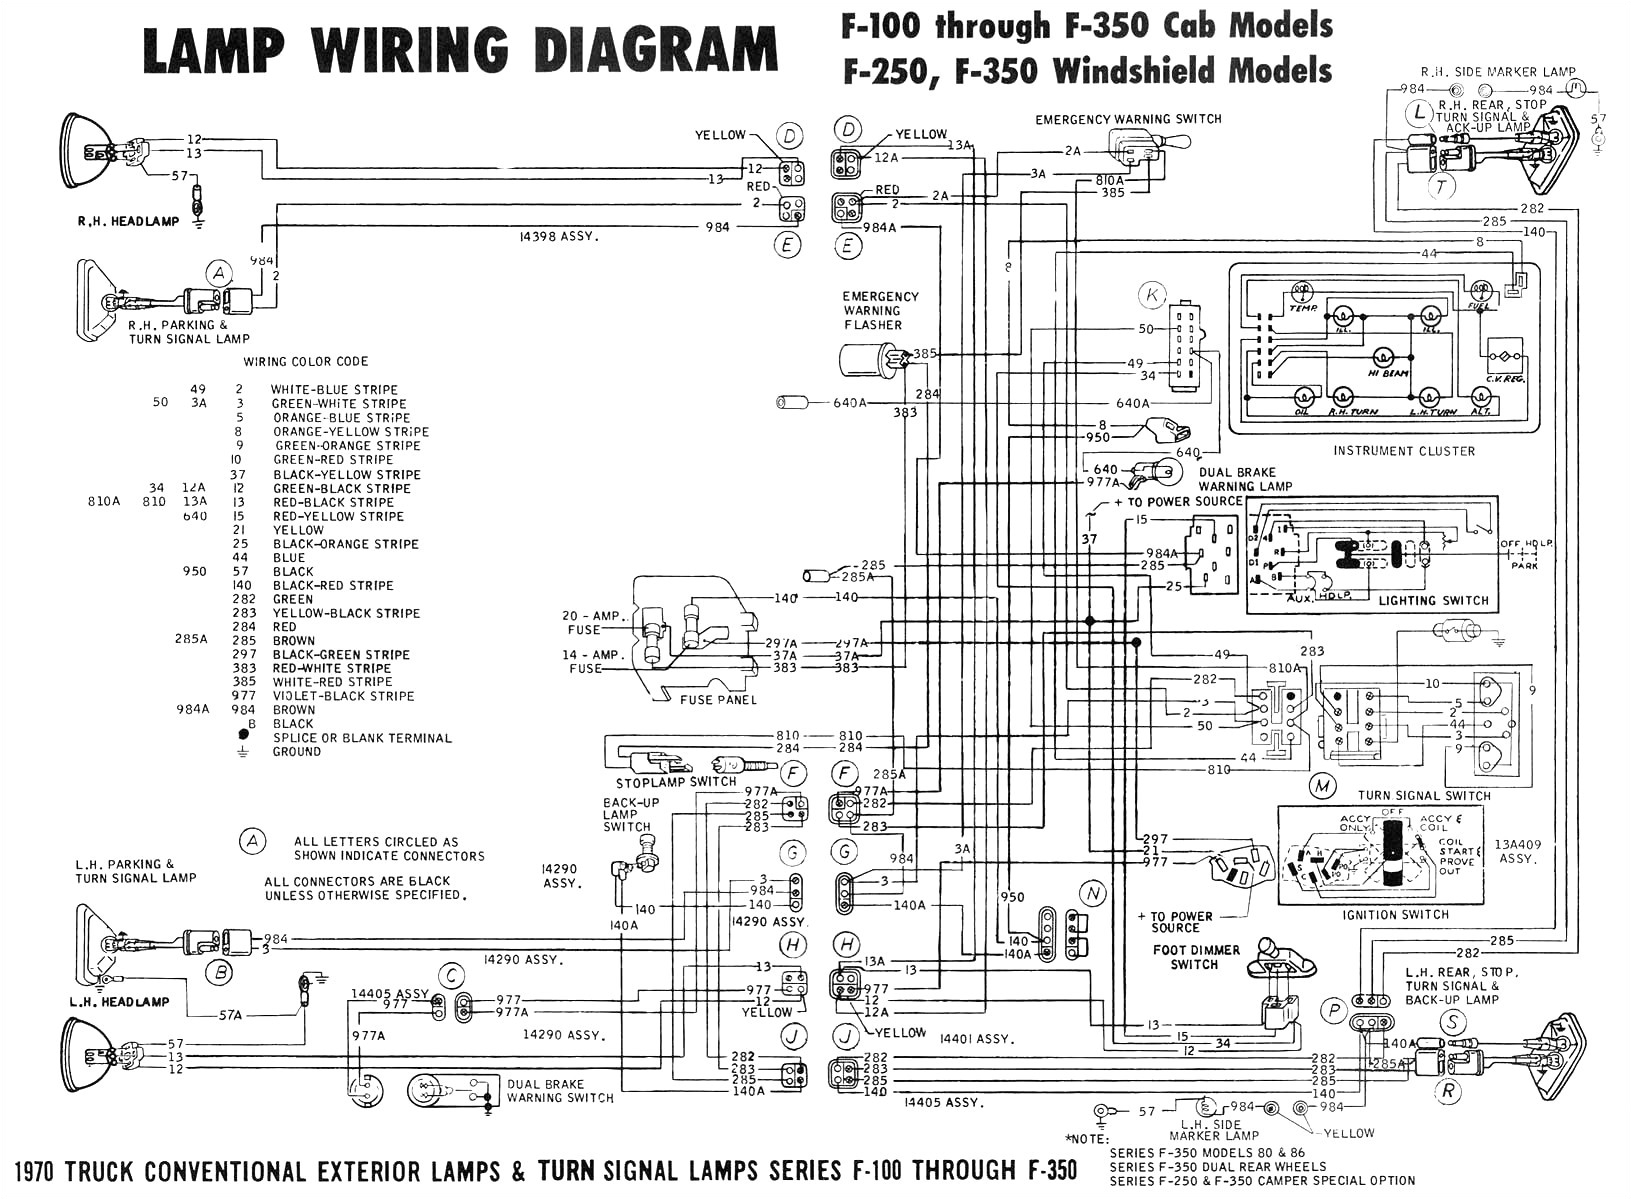 1994 ford E350 Wiring Diagram 1994 E350 Wiring Diagram Data Schematic Diagram